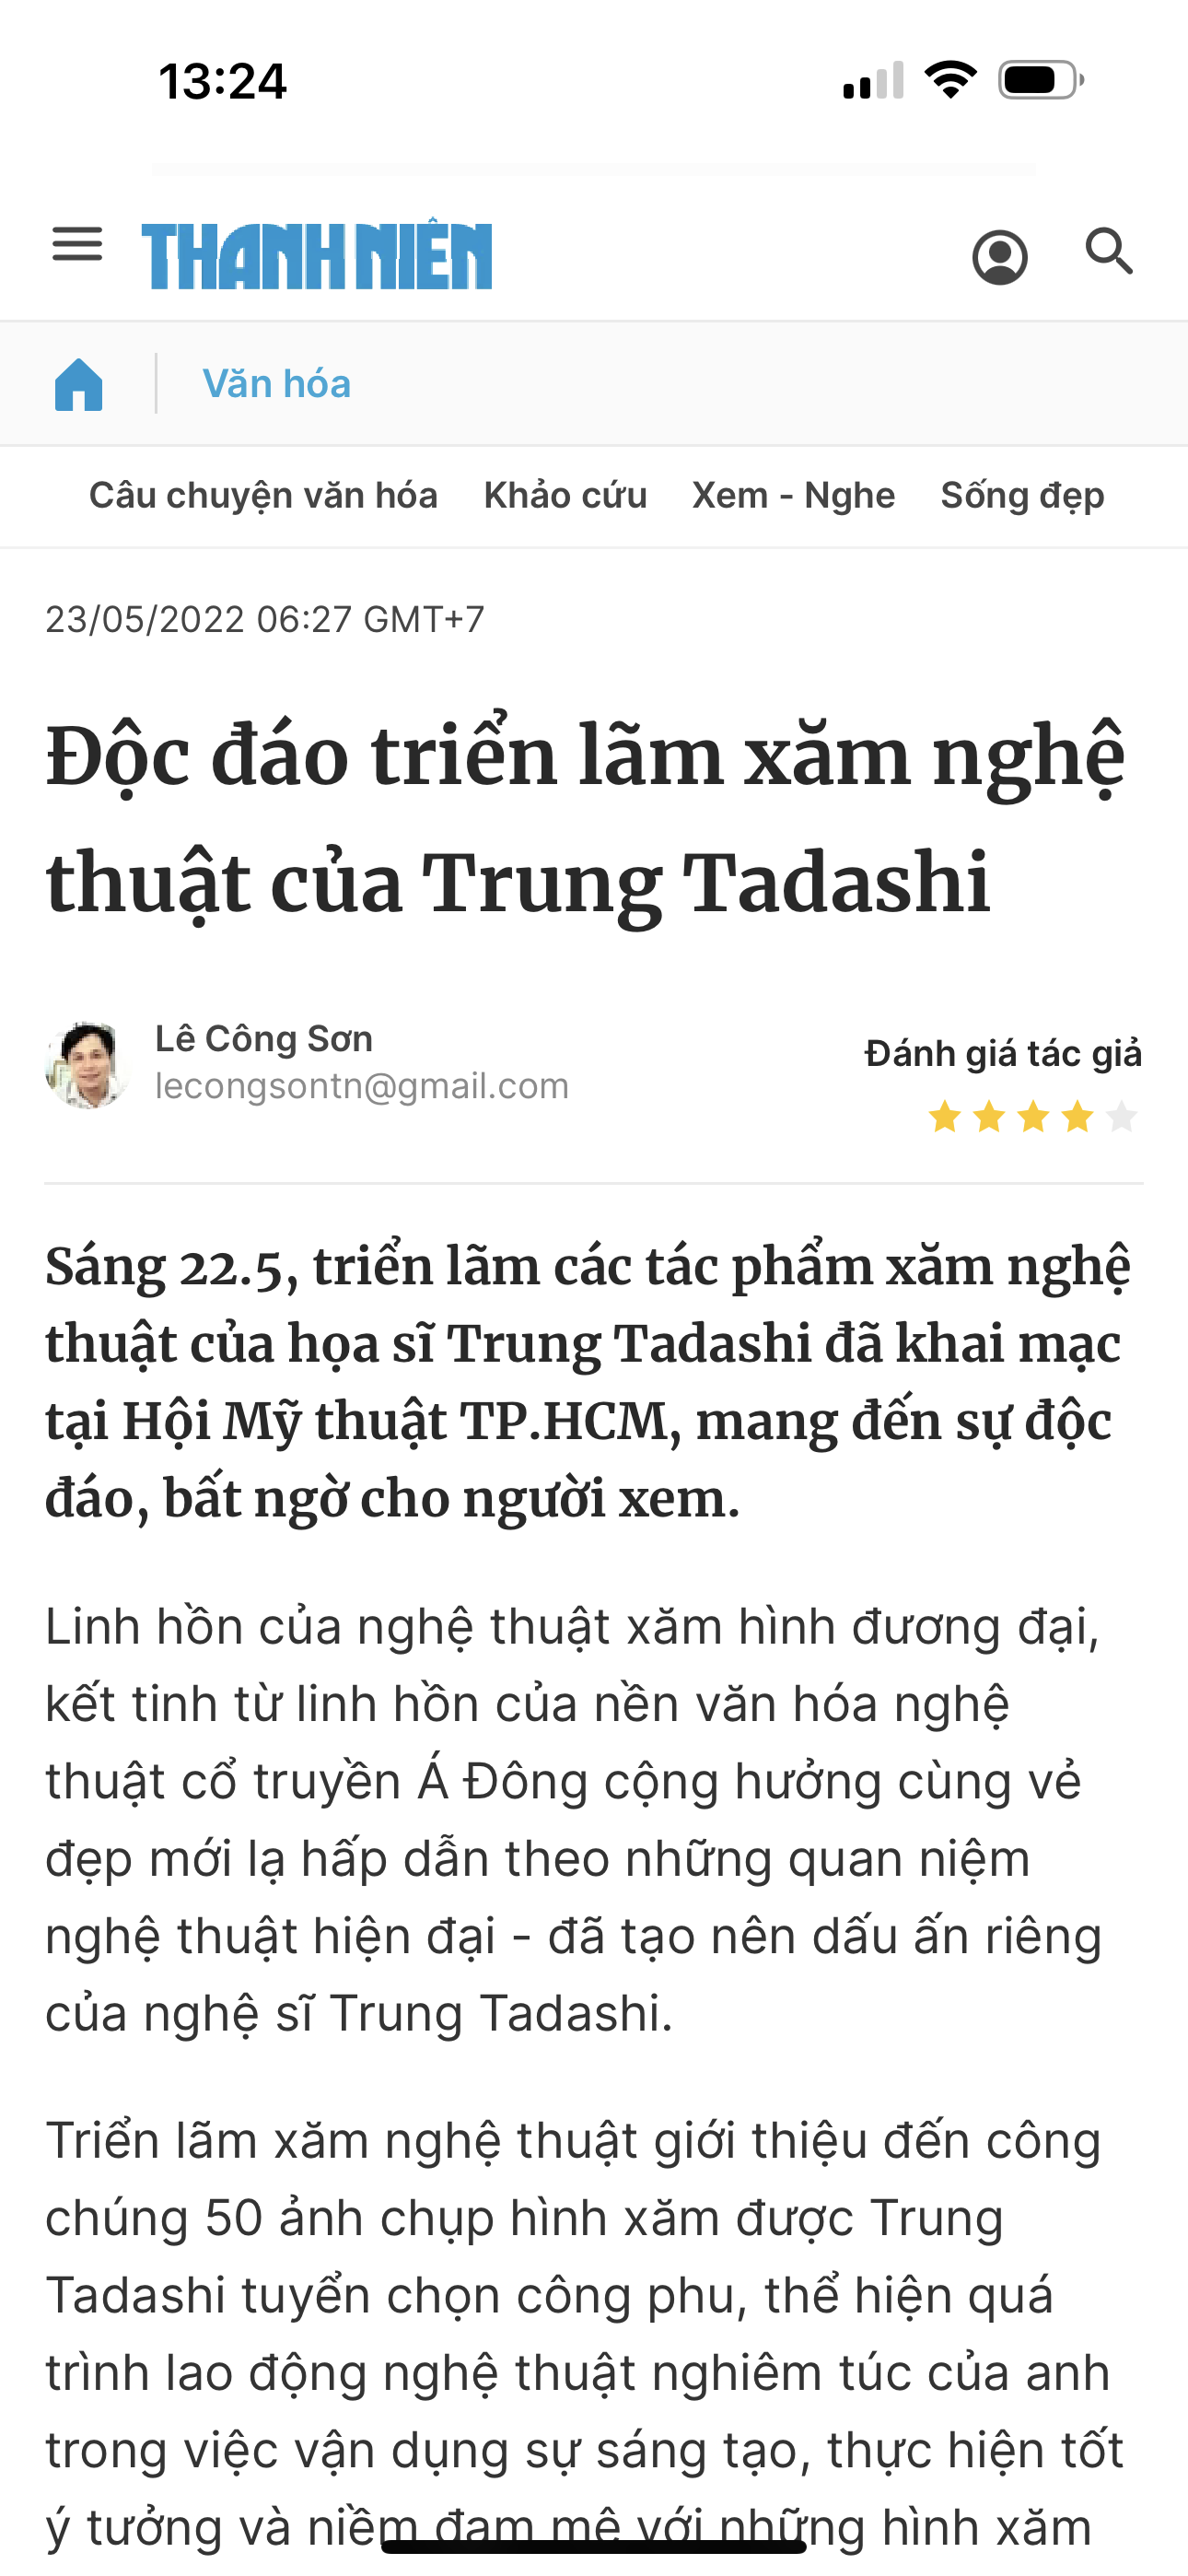 News in Thanh Nien online Newspaper